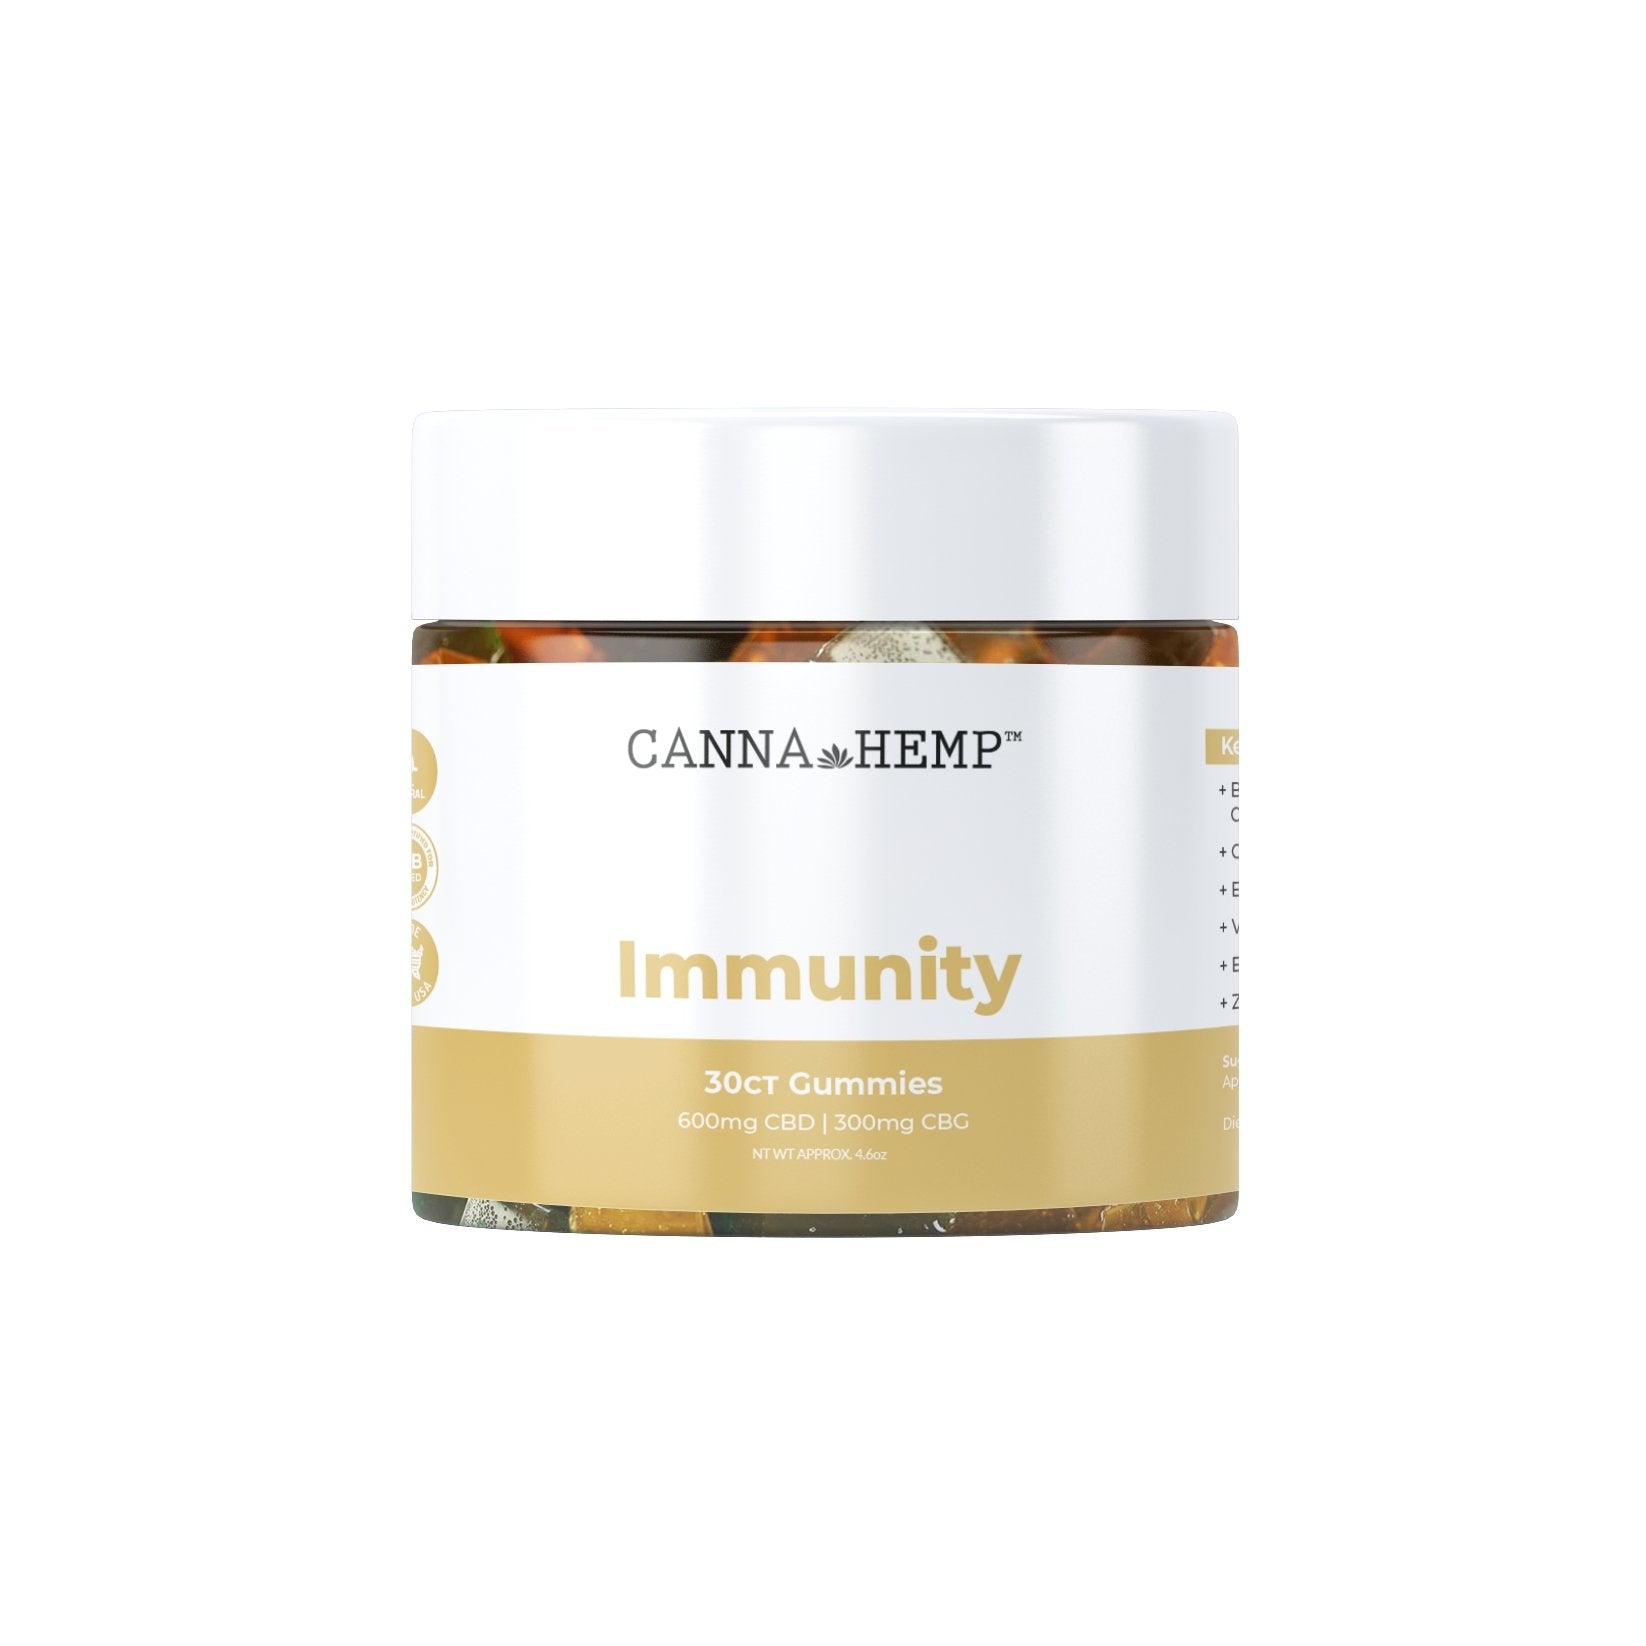 CannaHemp Immunity Gummies 30ct Best Price